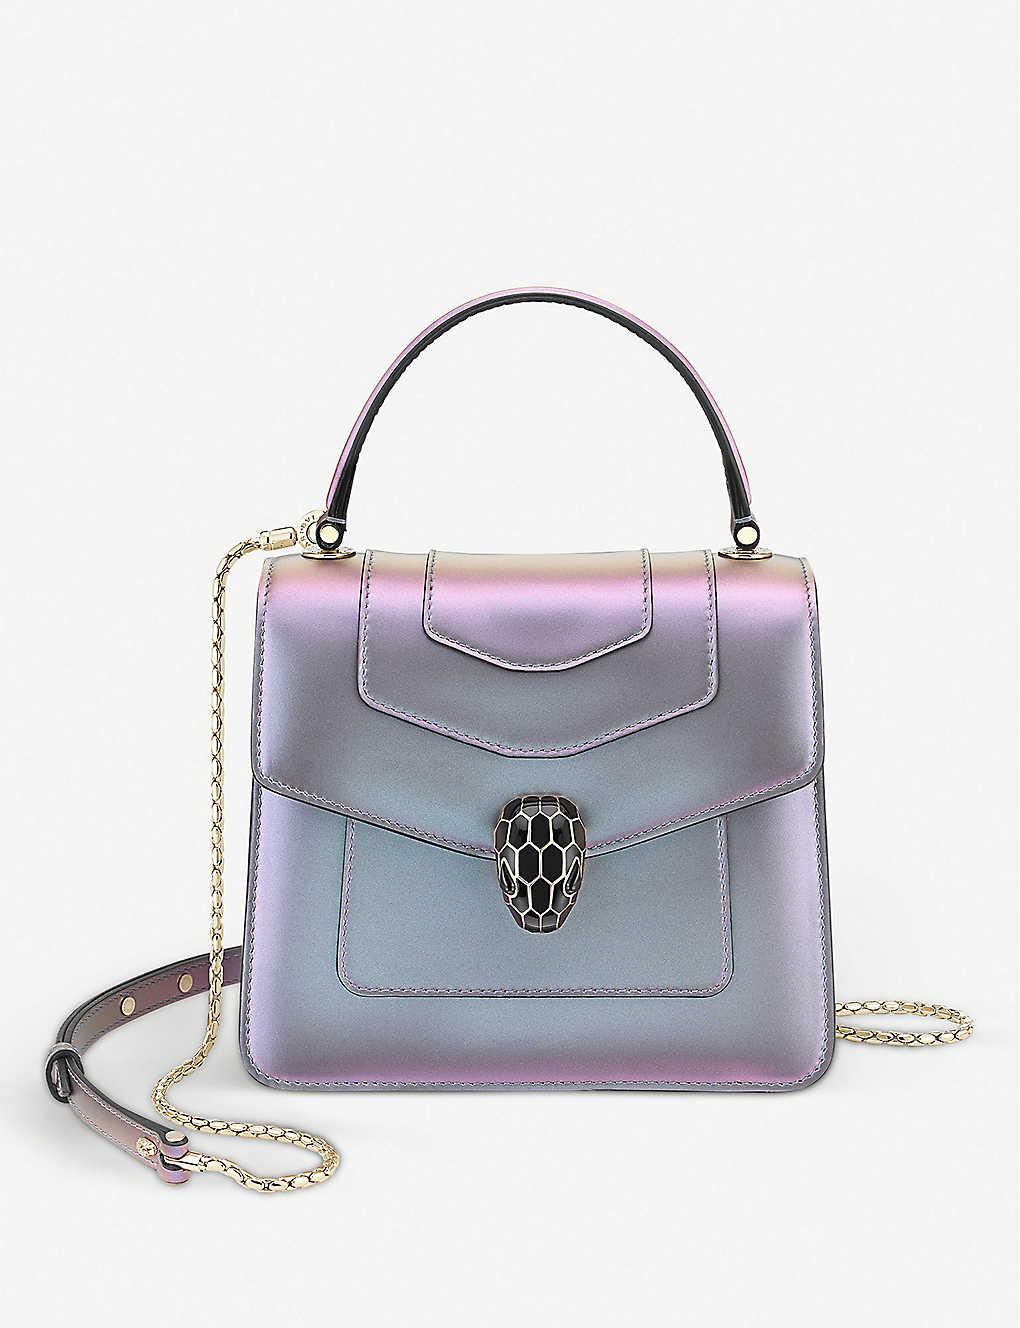 BVLGARI Serpenti Forever Leather Top-handle Bag in Purple